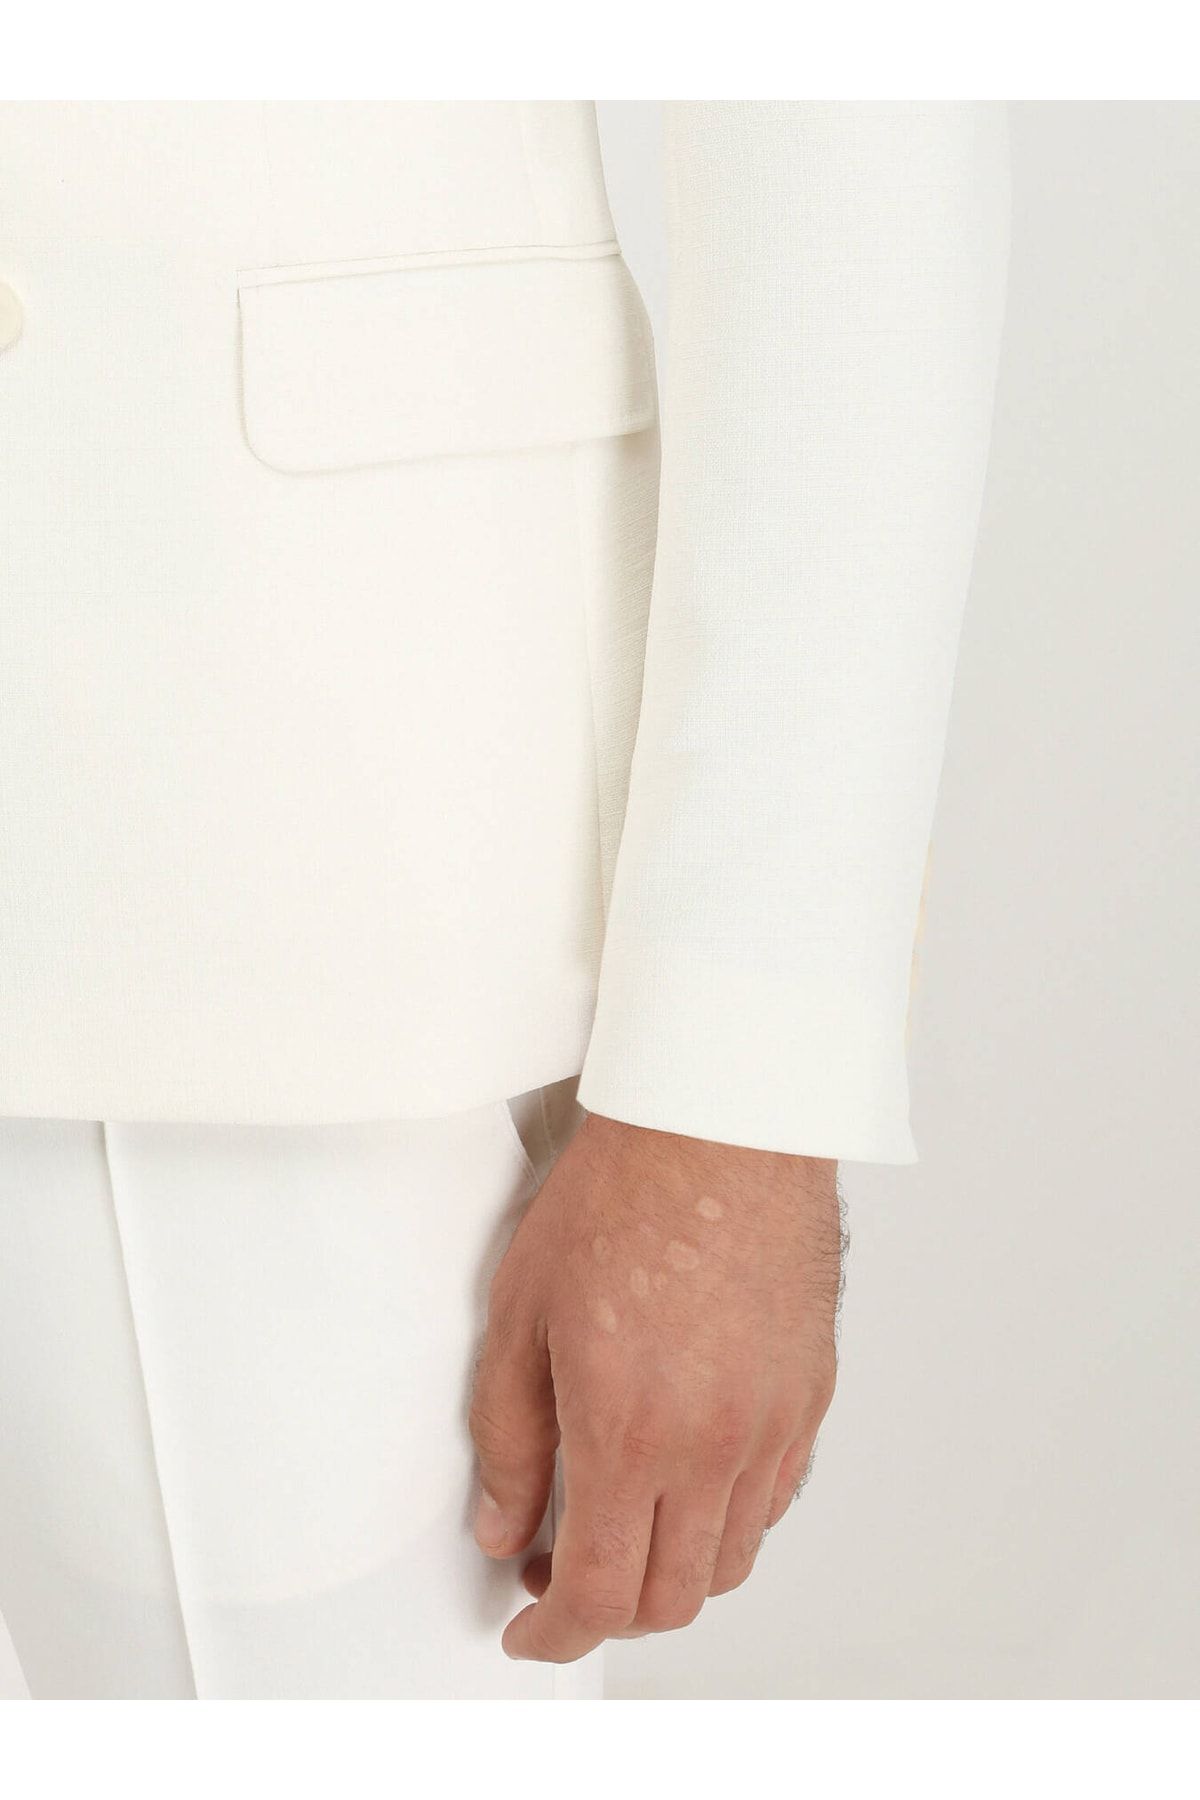 Kip ژاکت مناسب و باریک صاف سفید